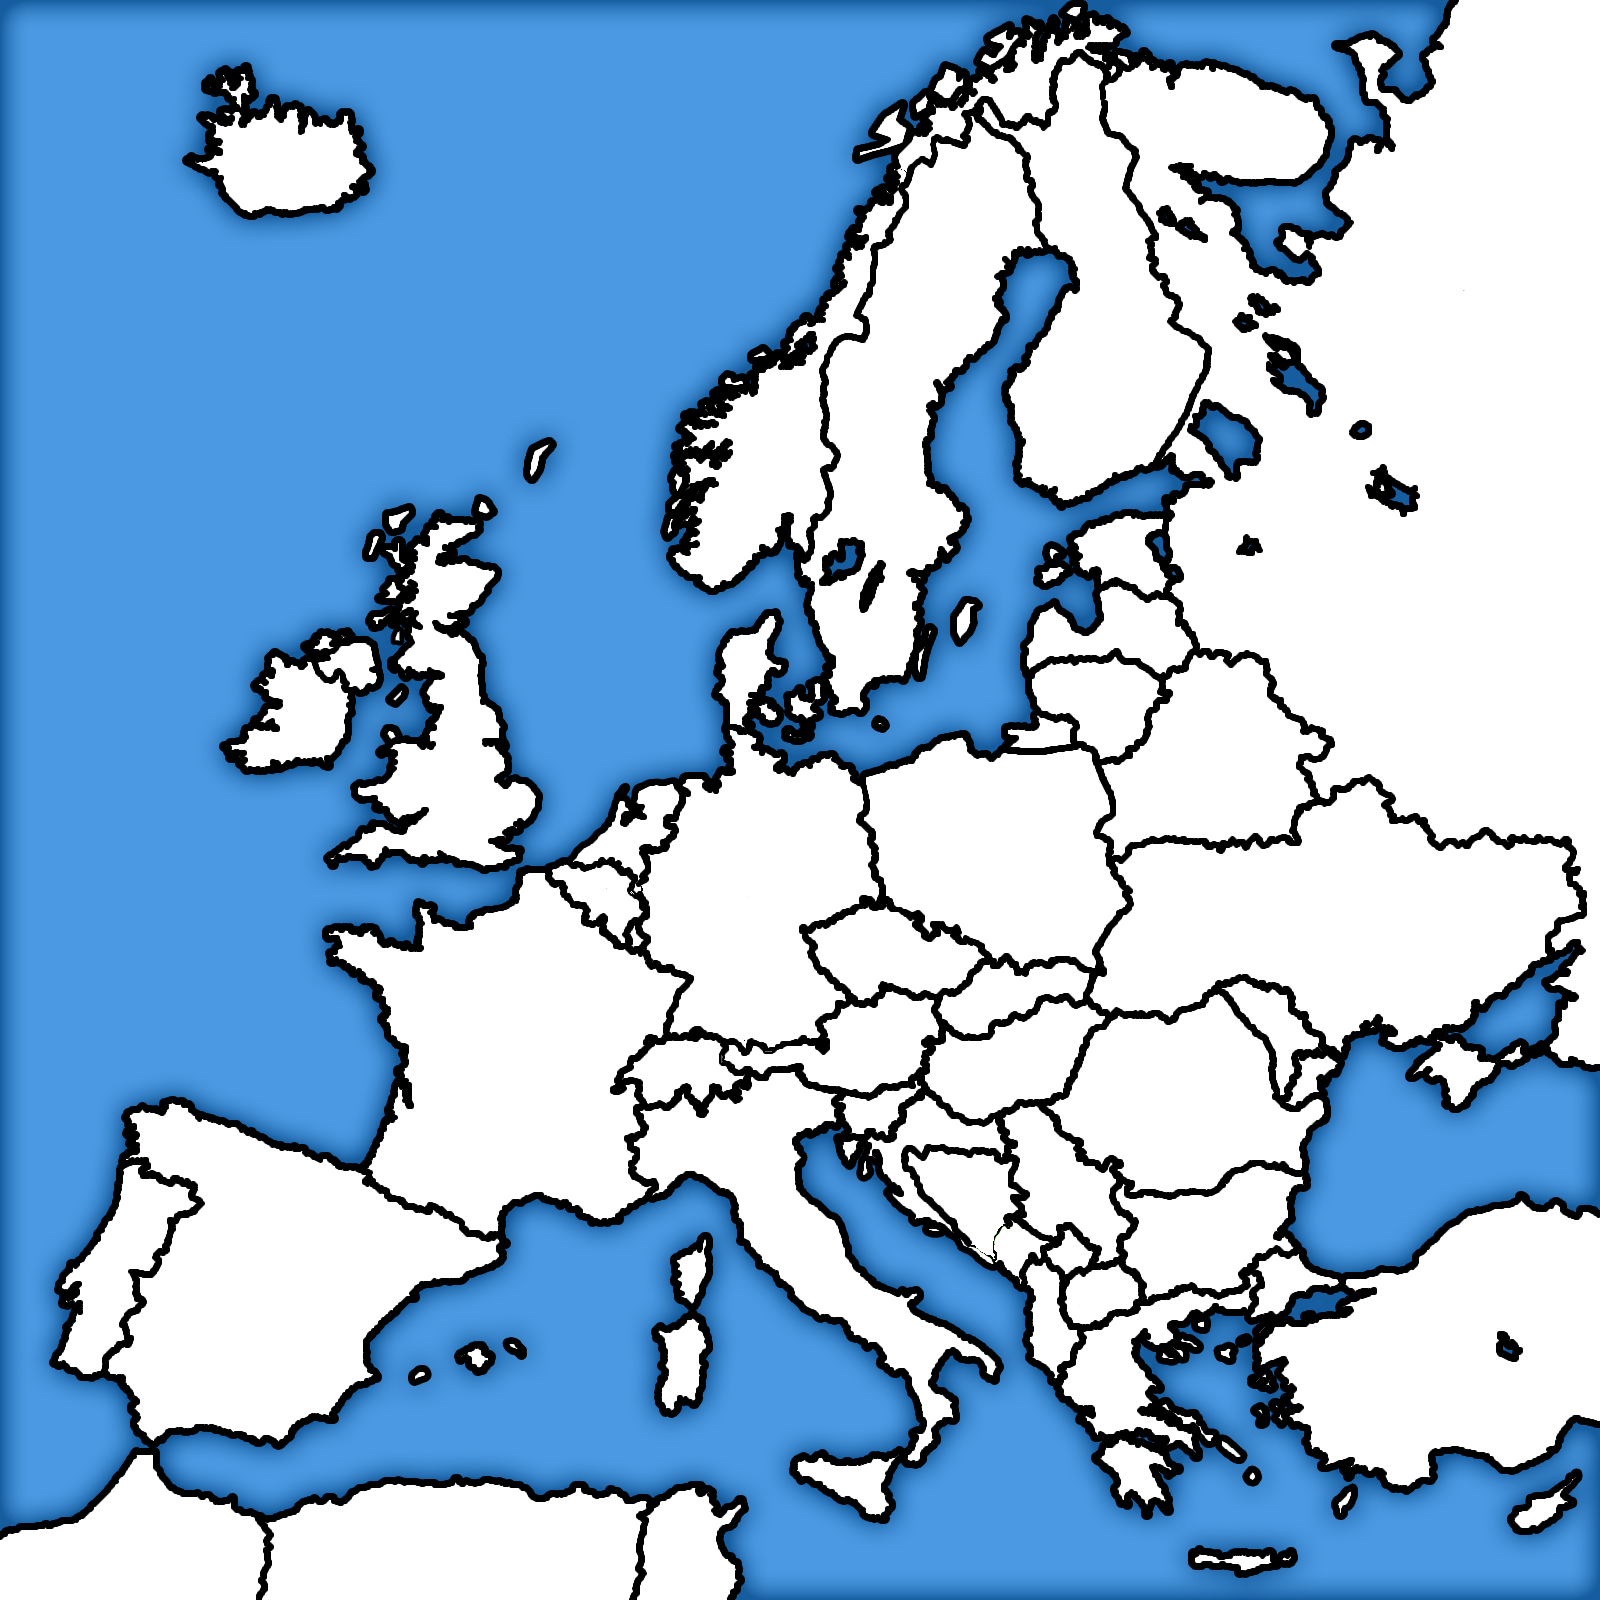 Белая пустая карта. Карта Европы пустая. Карта Европы 1936 года белая. Карта Европы для маппинга. Карта Европы пустая с границами.